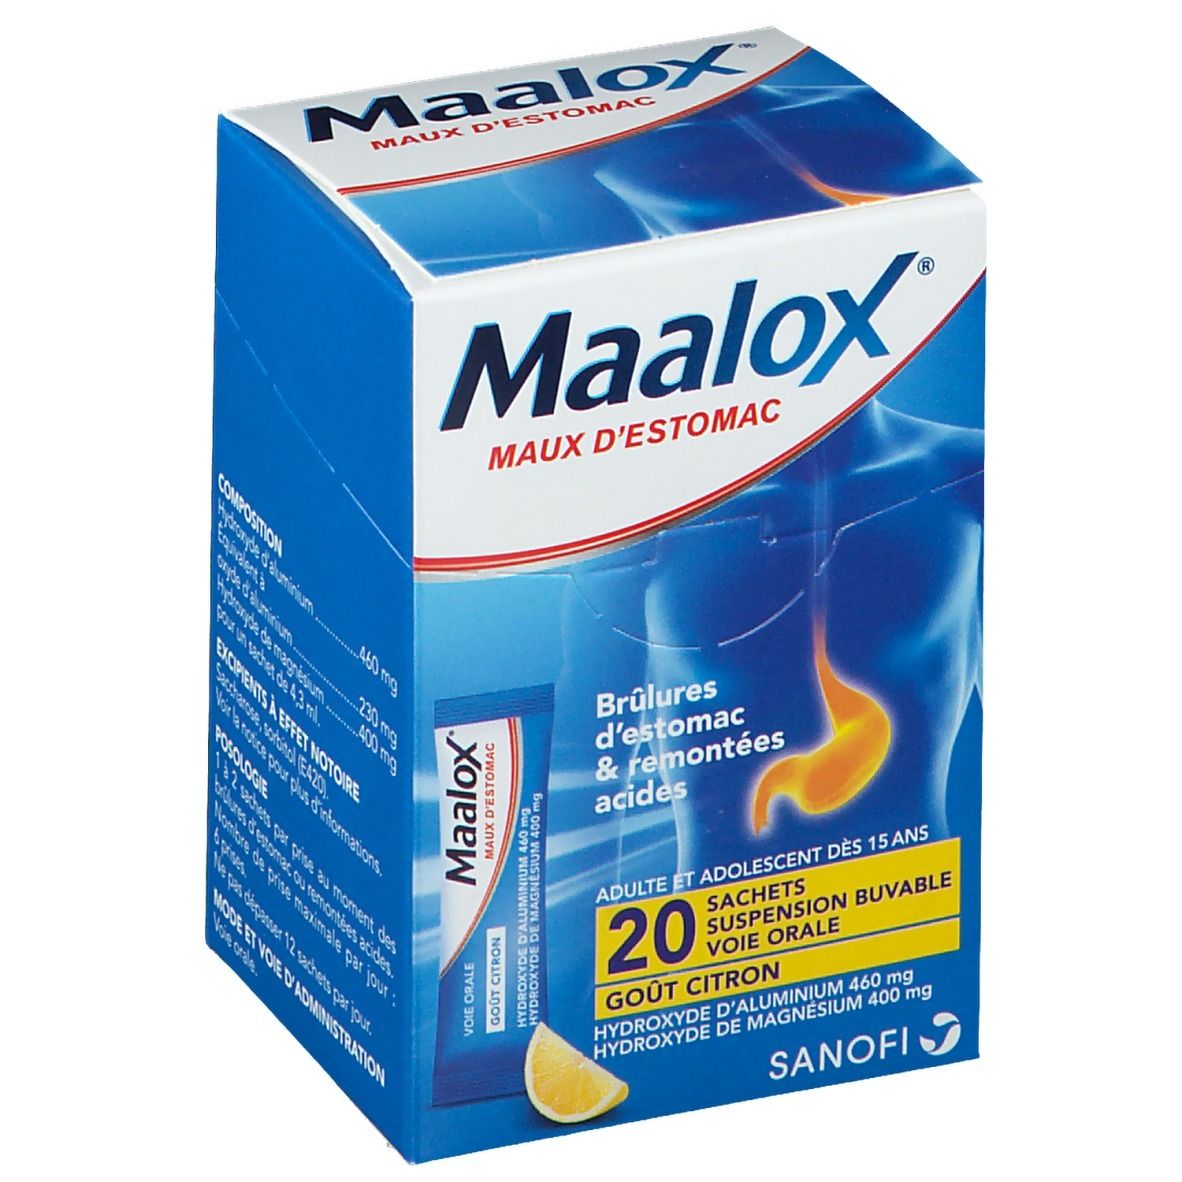 Maalox® Maux d'Estomac